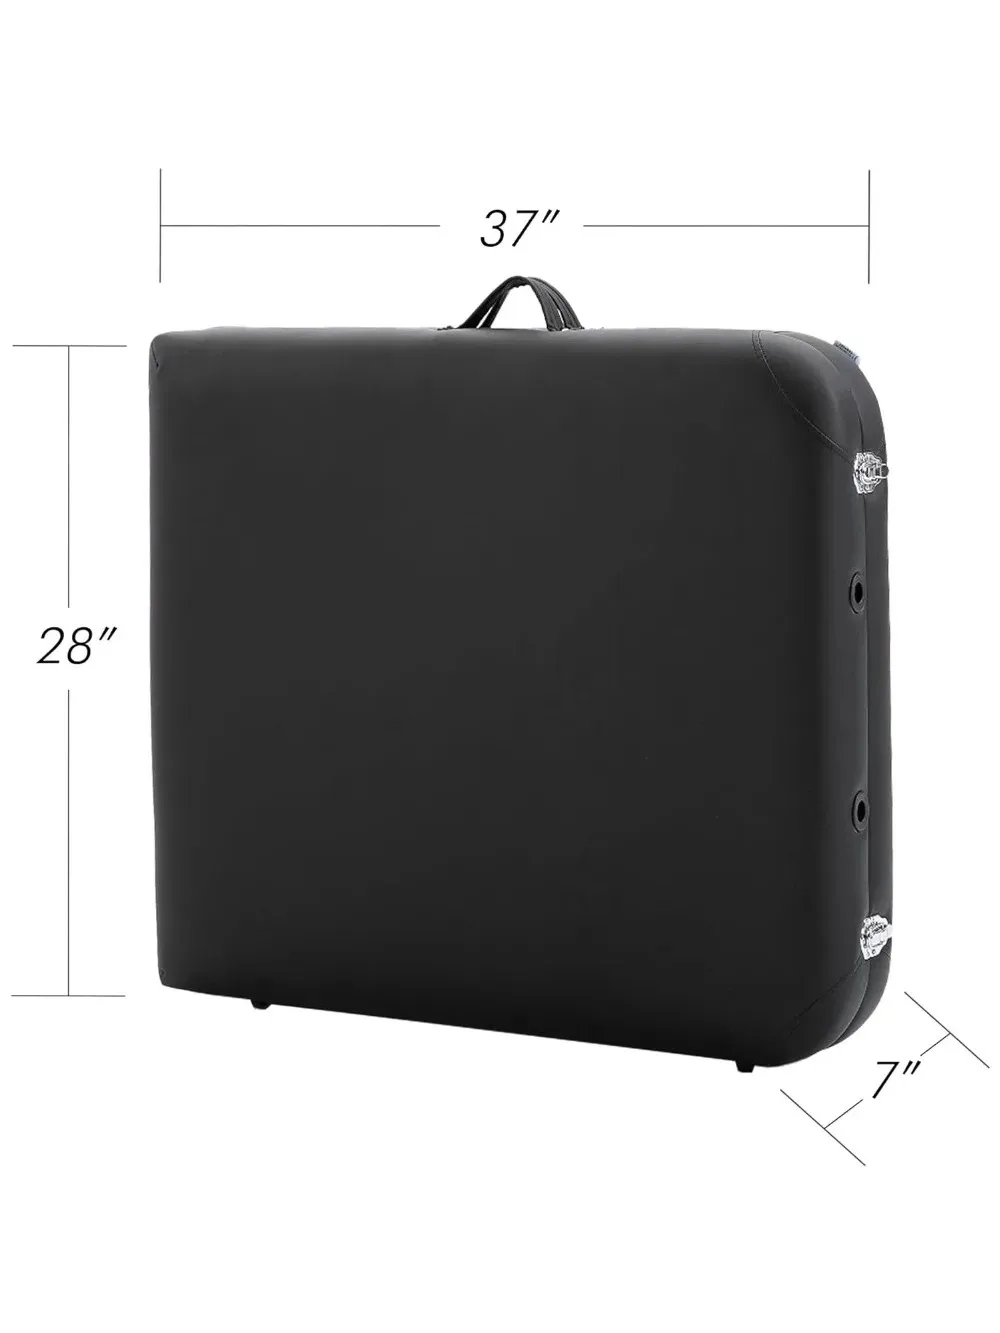 Massage Table, All-Inclusive Portable Massage Table (Black)